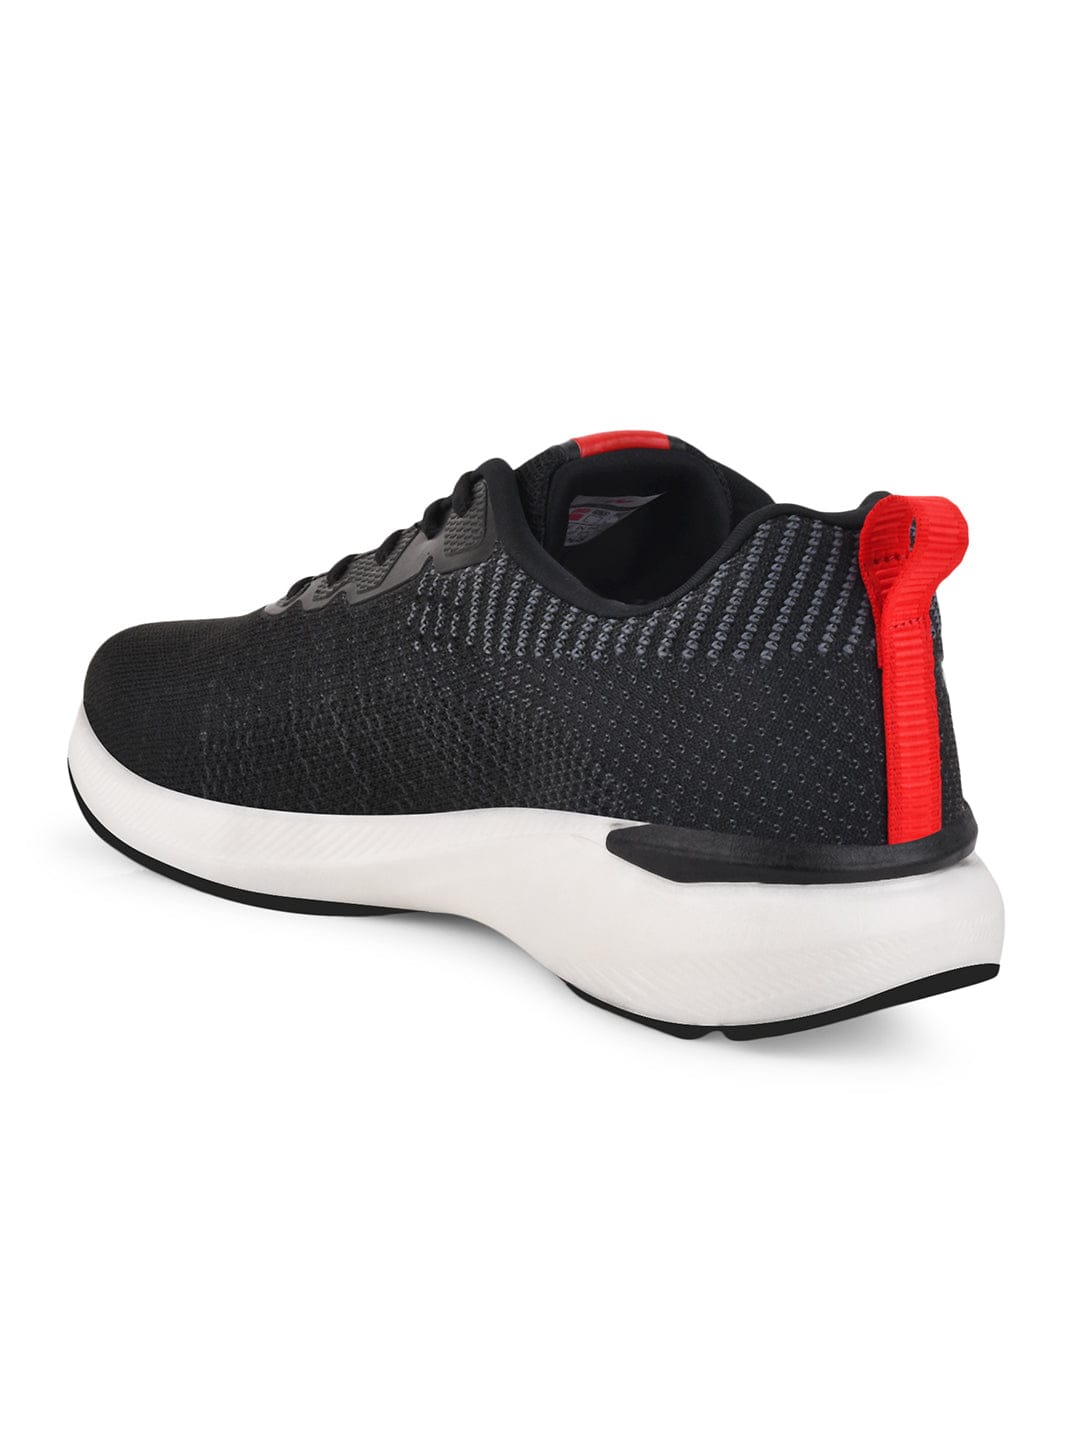 Buy NODE Black Men's Running Shoes online | Campus Shoes